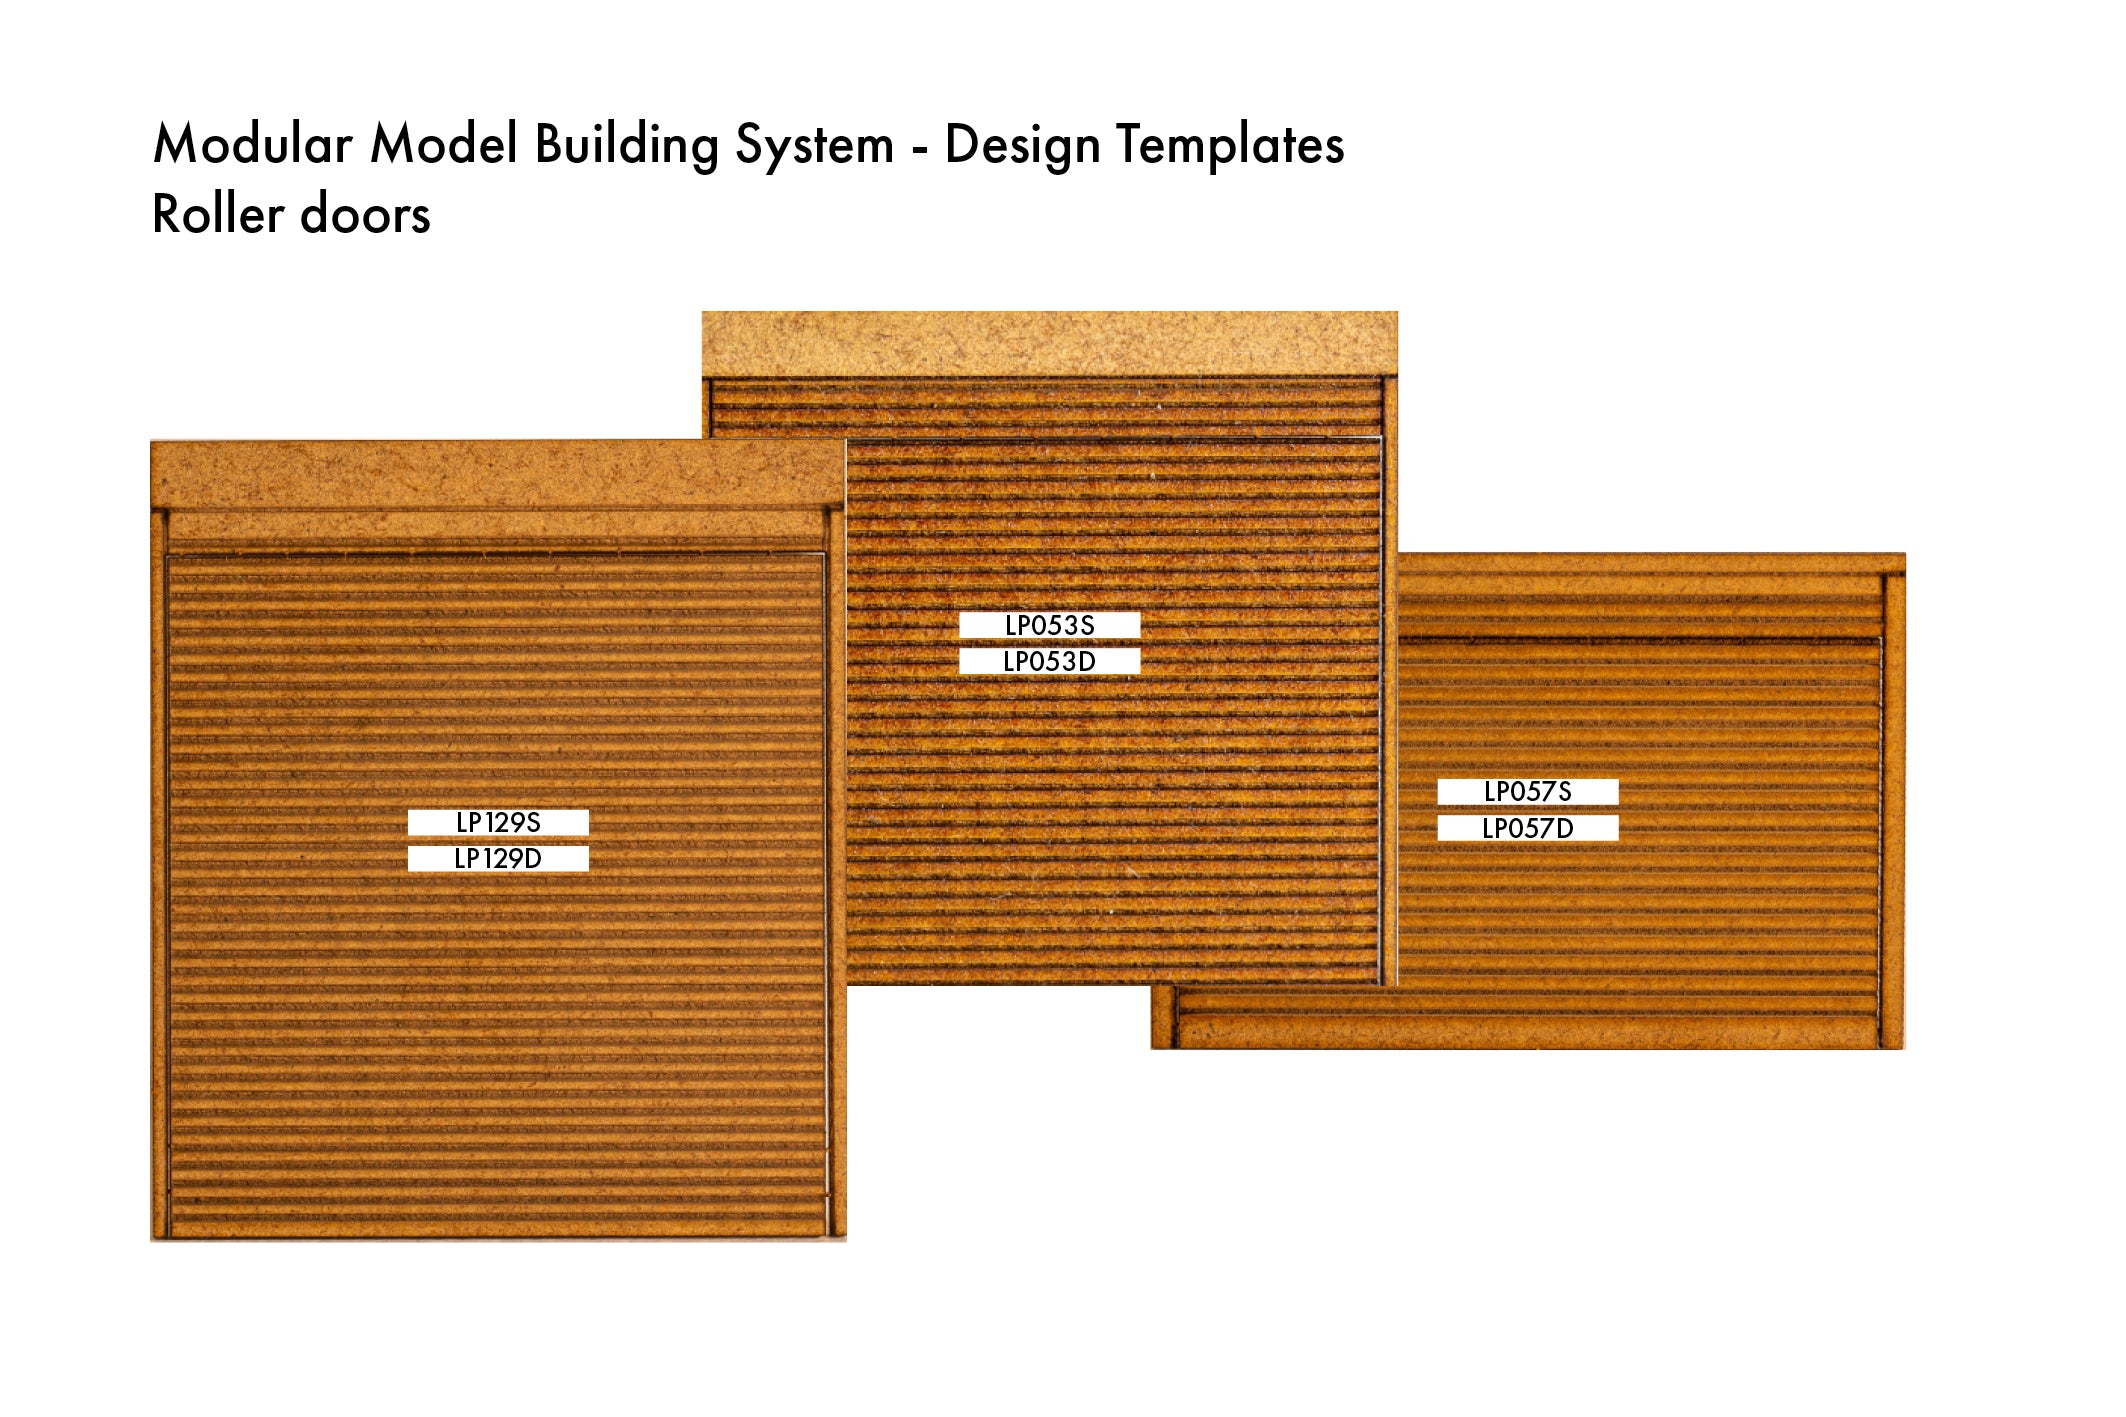 MMBSDT-RD - Roller doors - MMBS panel template